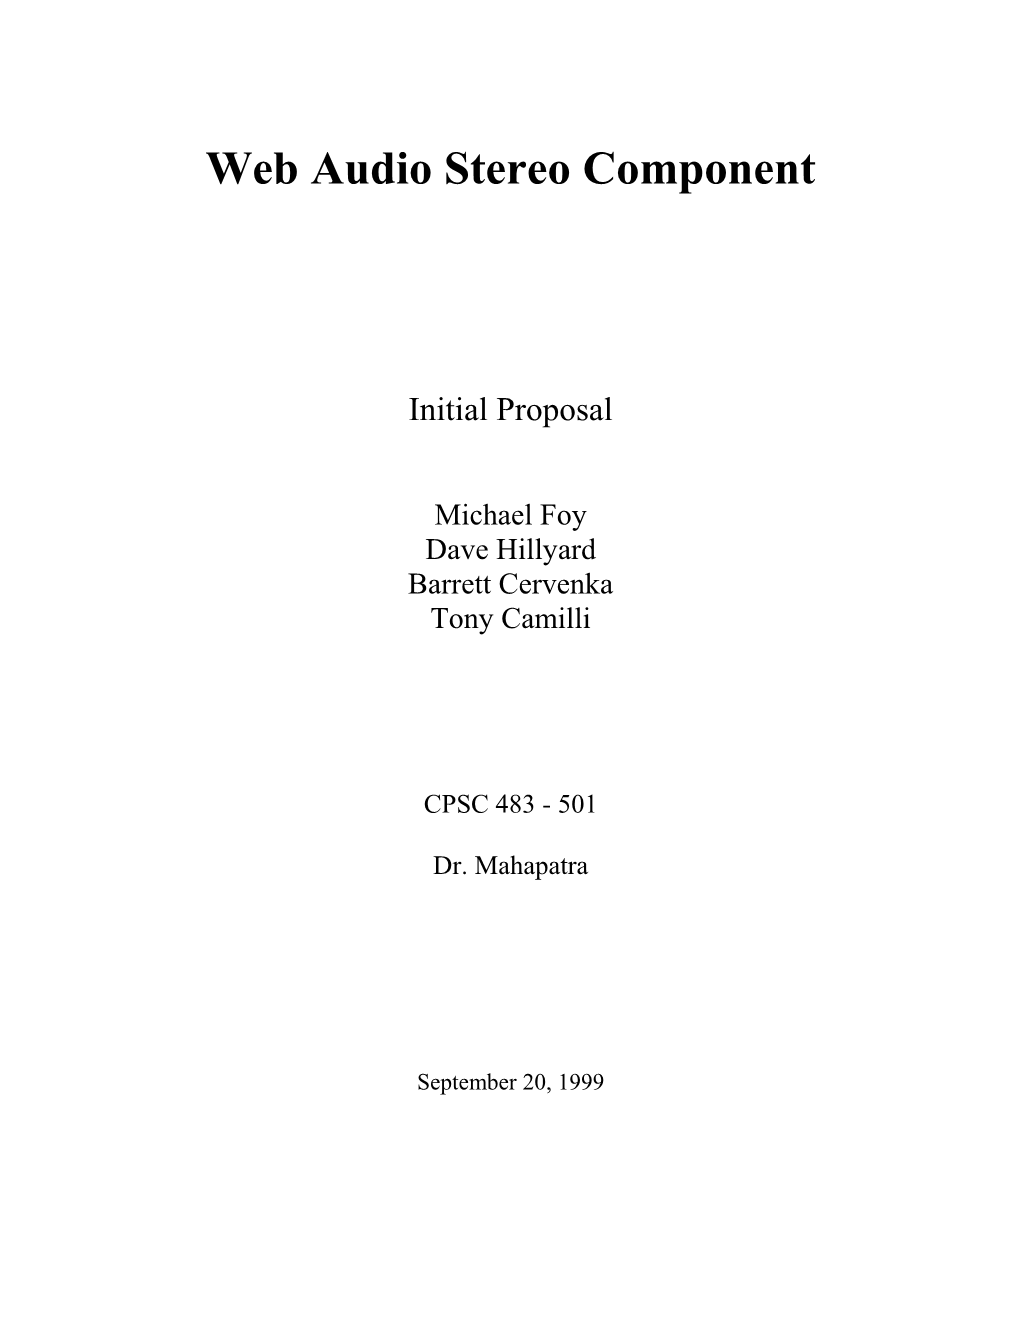 Digital Audio Compression Storage and Retrieval System (DACSRS)